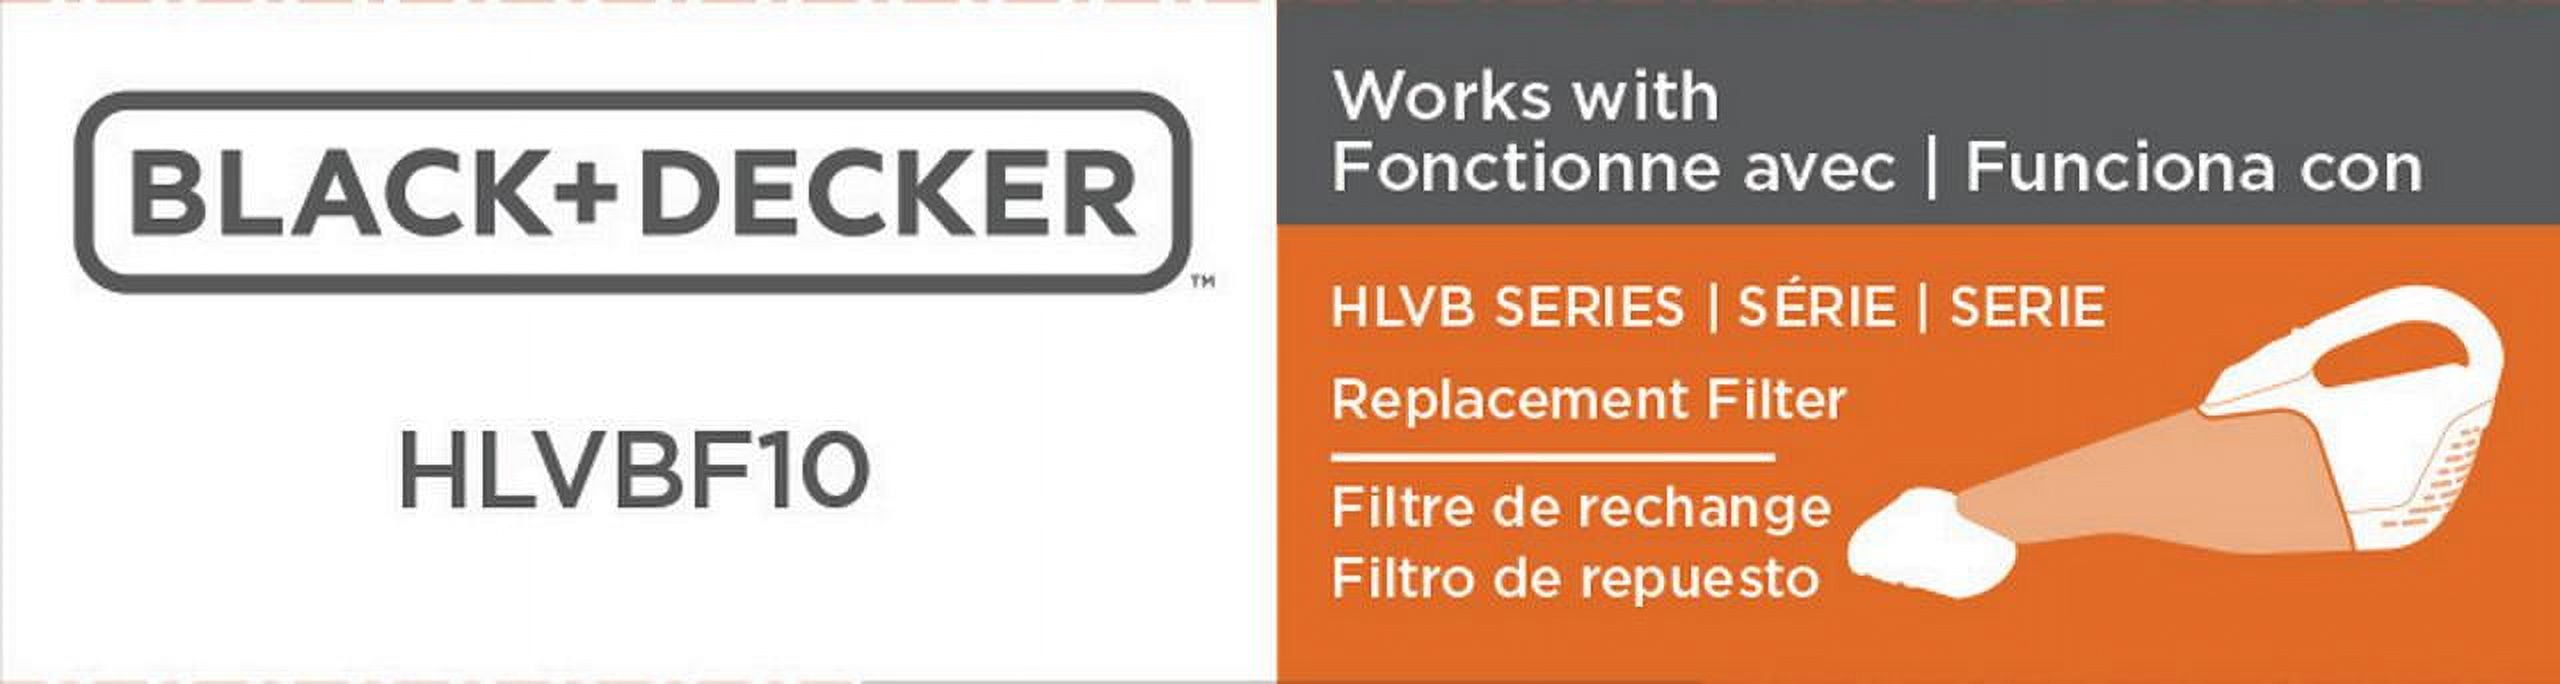 BLACK+DECKER dustbuster QuickClean Washable Vacuum Filter for